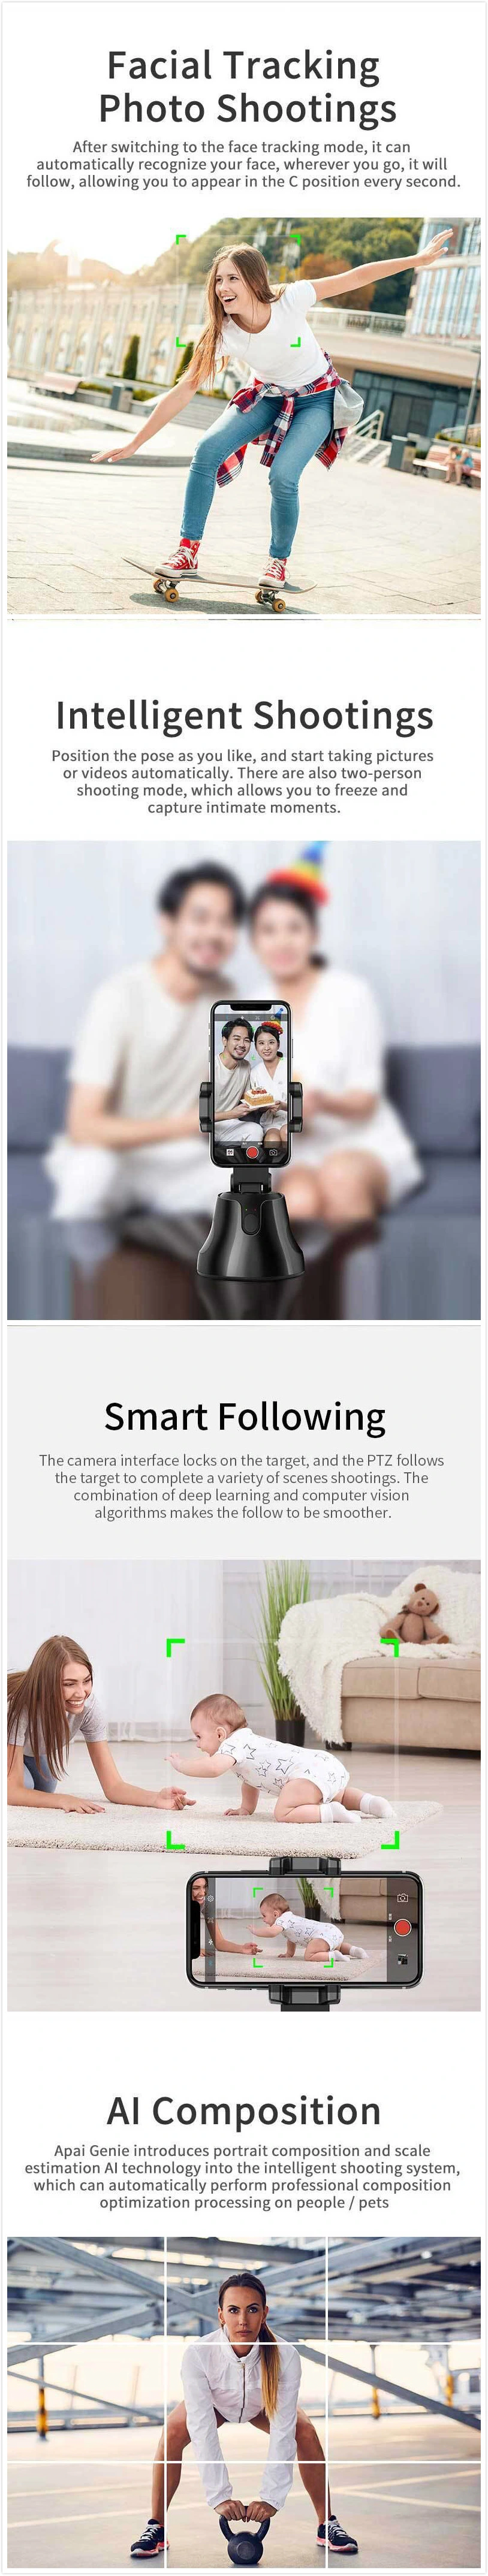 Apai Genie 360 Rotation Selfie Auto Tracking Camera Mount Smart Phone Holder Apai Genie